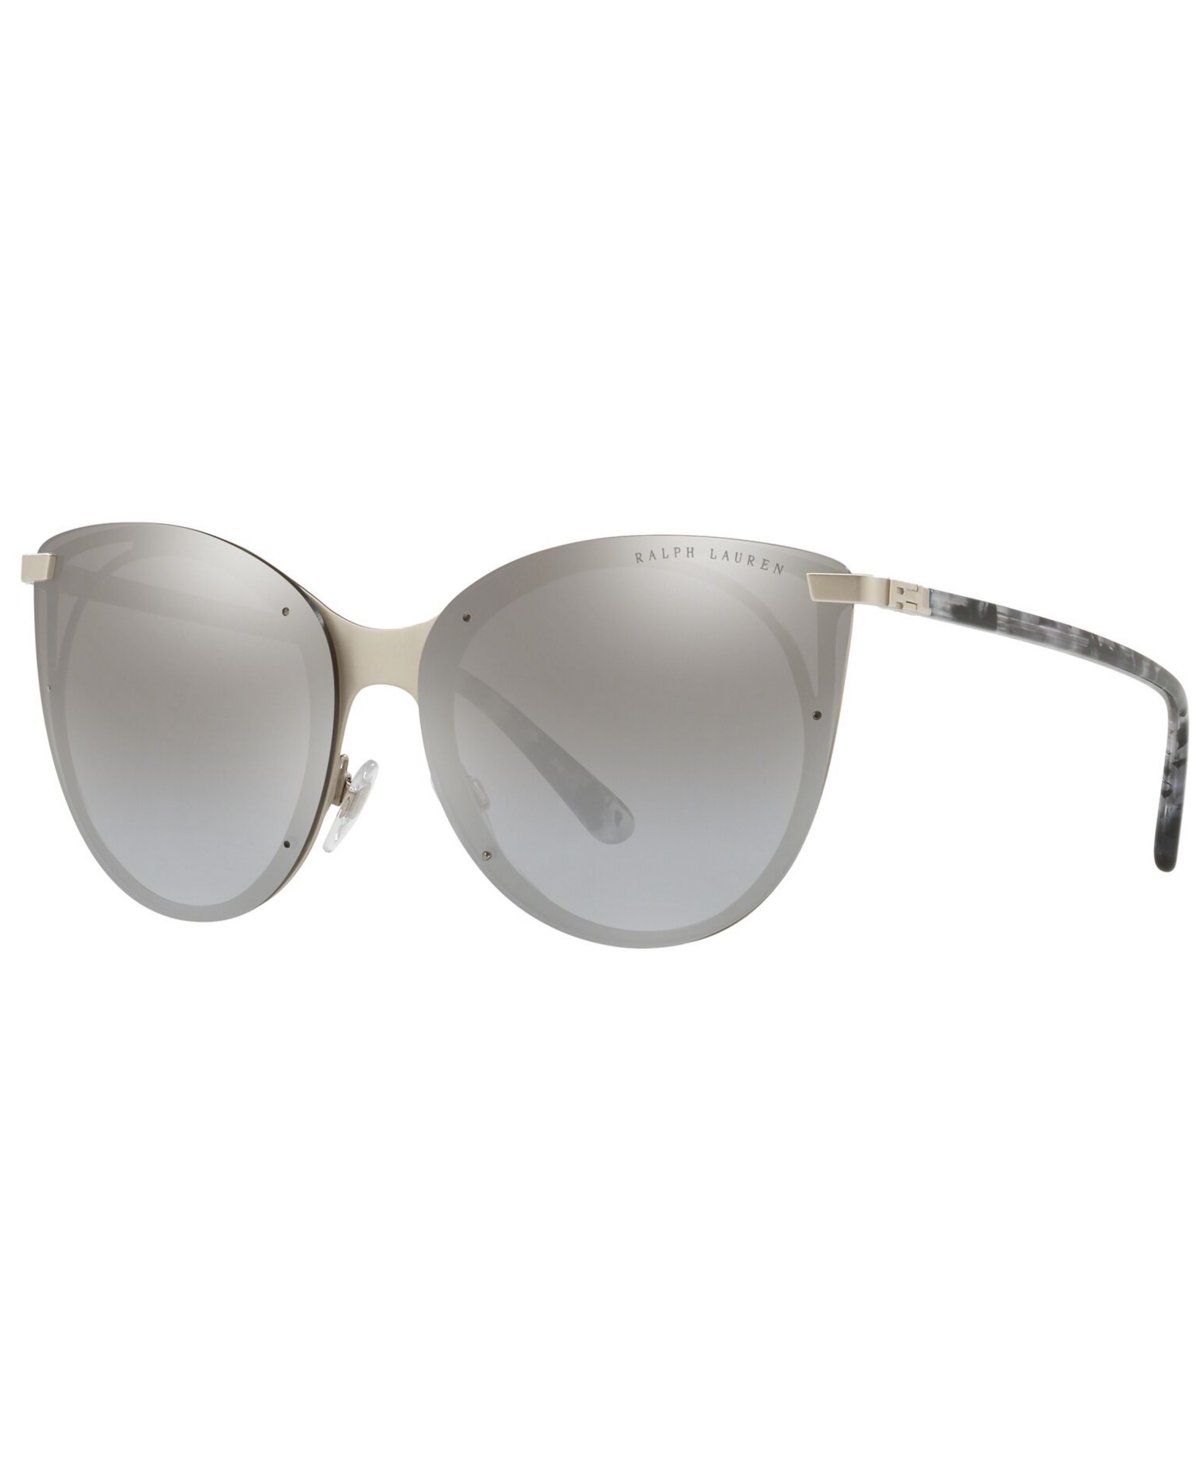 Ralph Lauren Women's Sunglasses, Rl7059 63 In Silver,silver